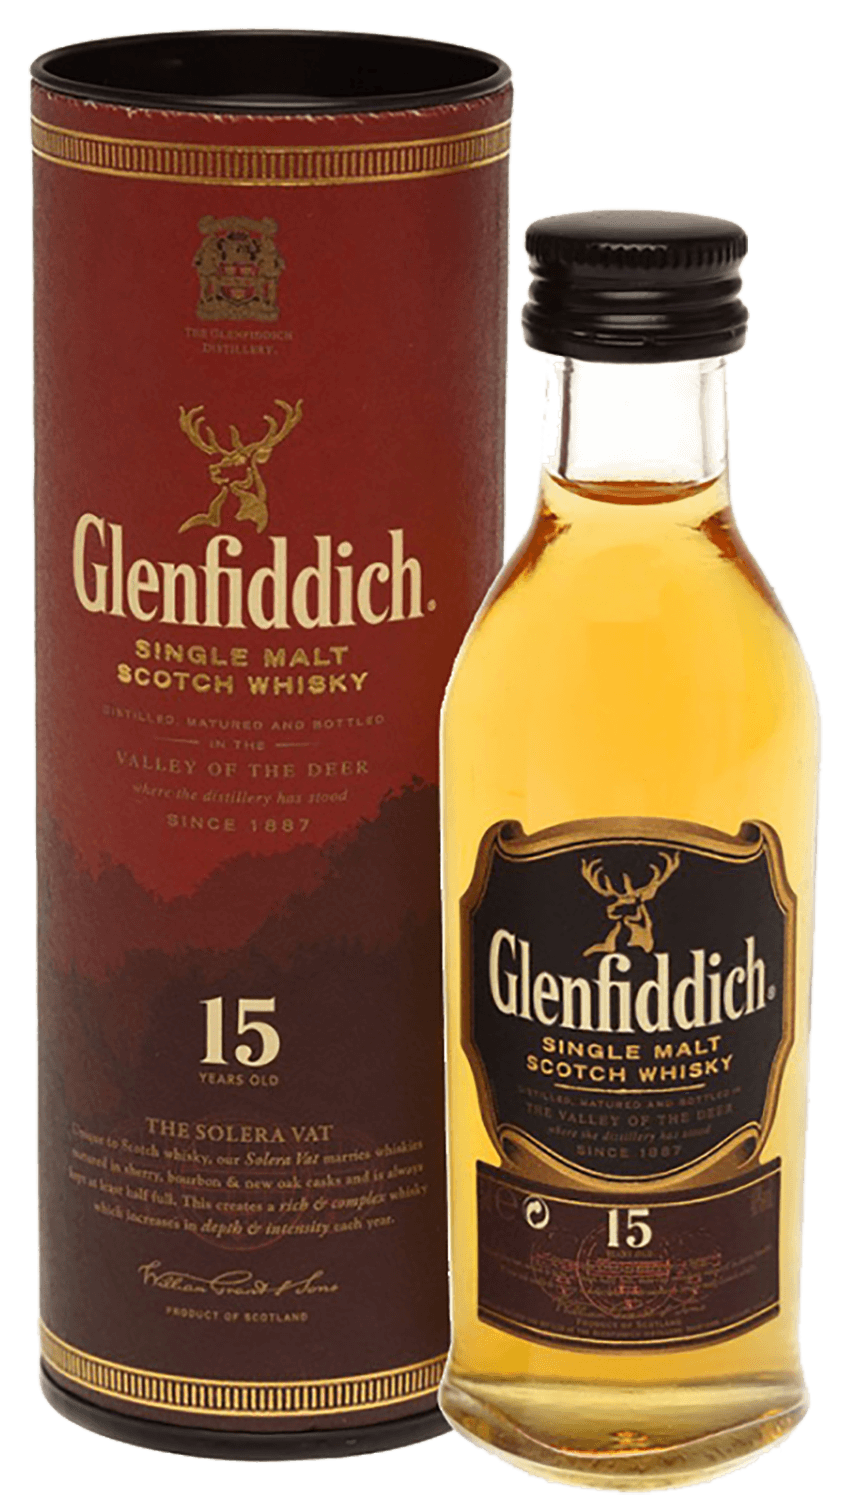 Glenfiddich Single Malt Scotch Whisky 15 y.o. (gift box) glenfiddich 15 y o single malt scotch whisky gift box with 2 glasses